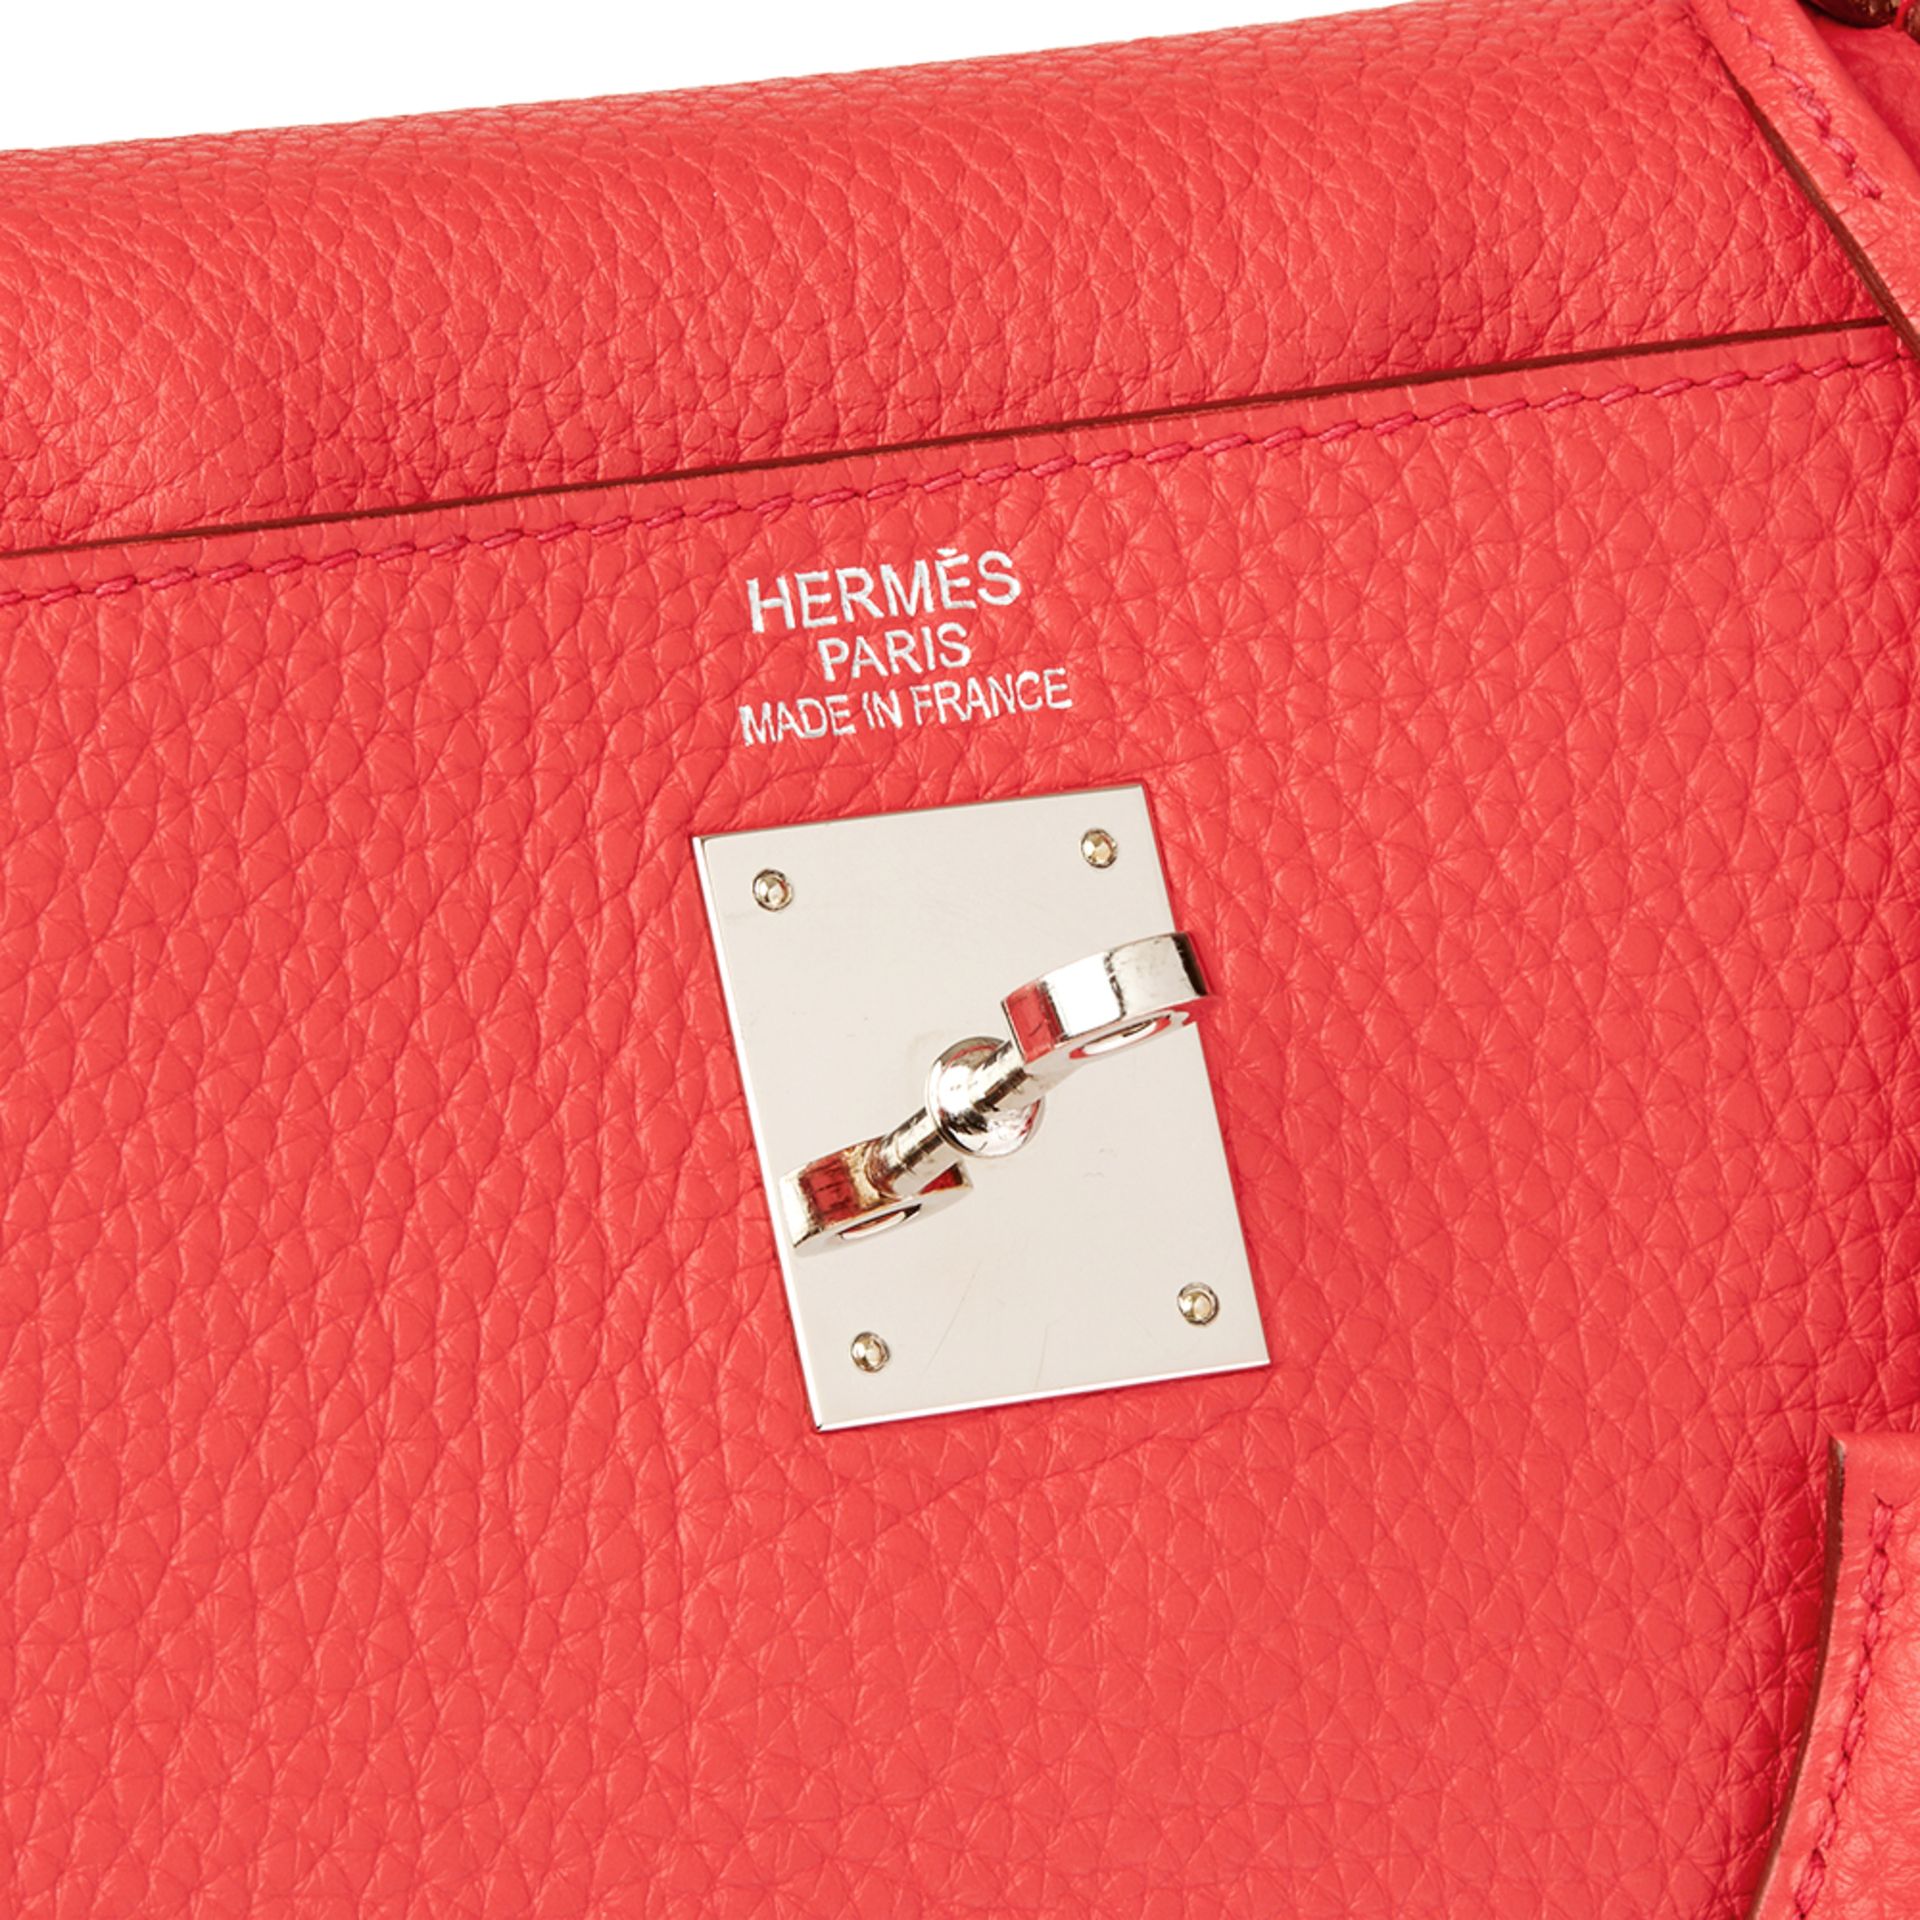 Hermès Bougainvillier Togo Leather Kelly 35cm Retourne - Image 7 of 10